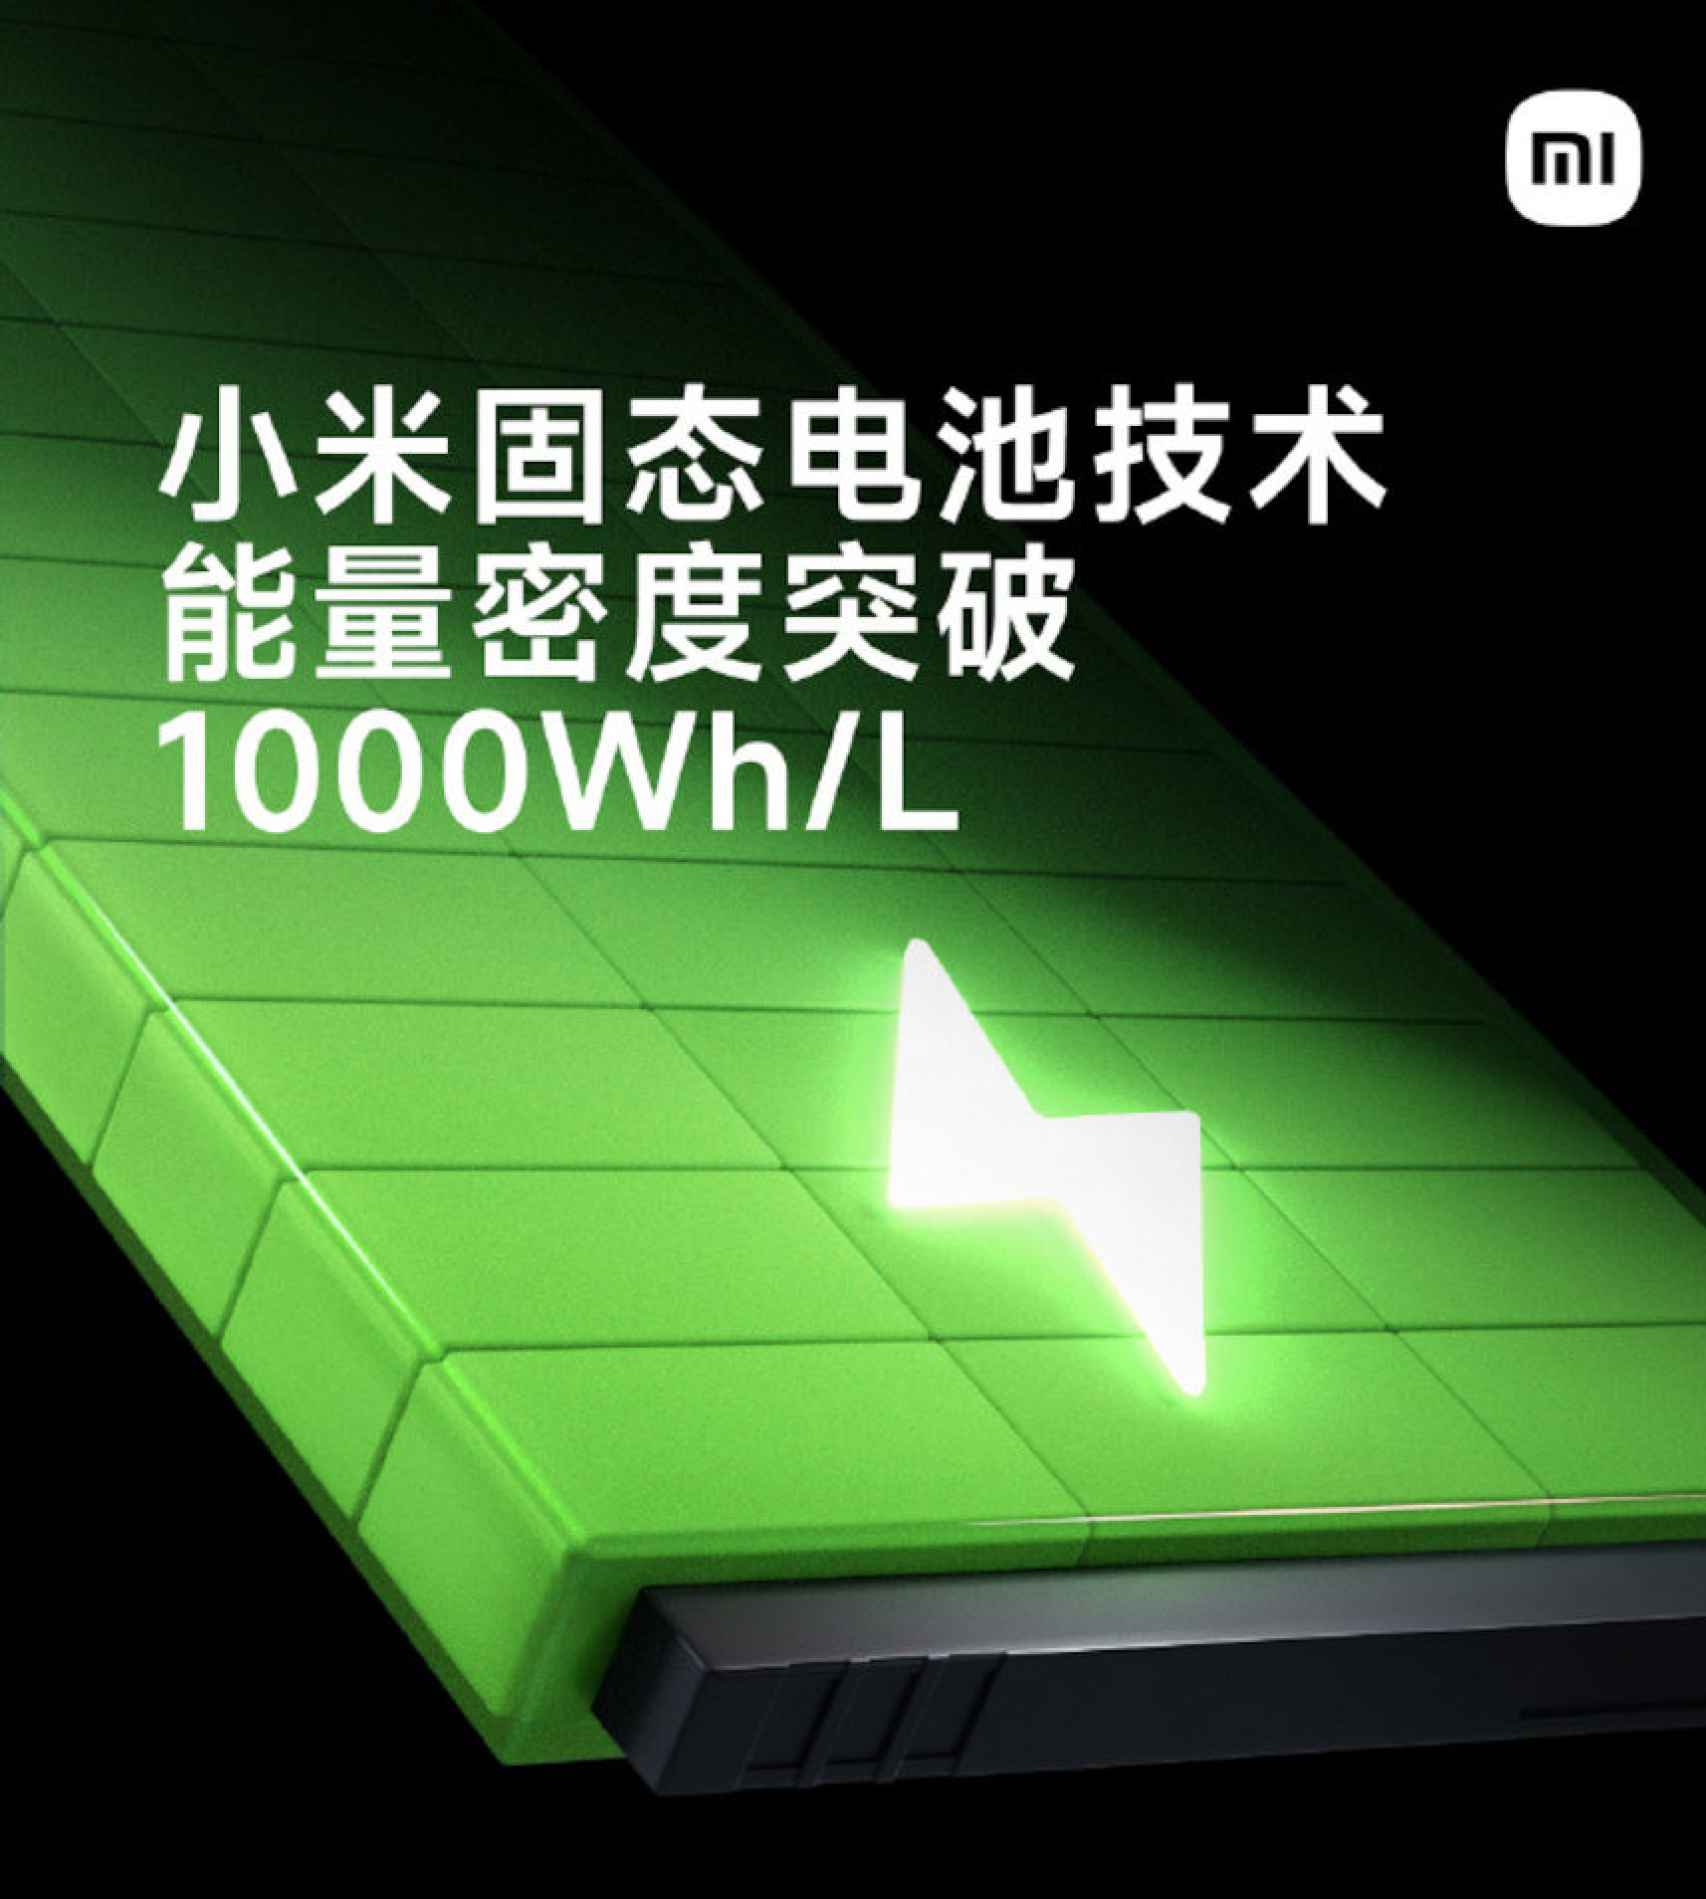 Batería de estado sólido de Xiaomi